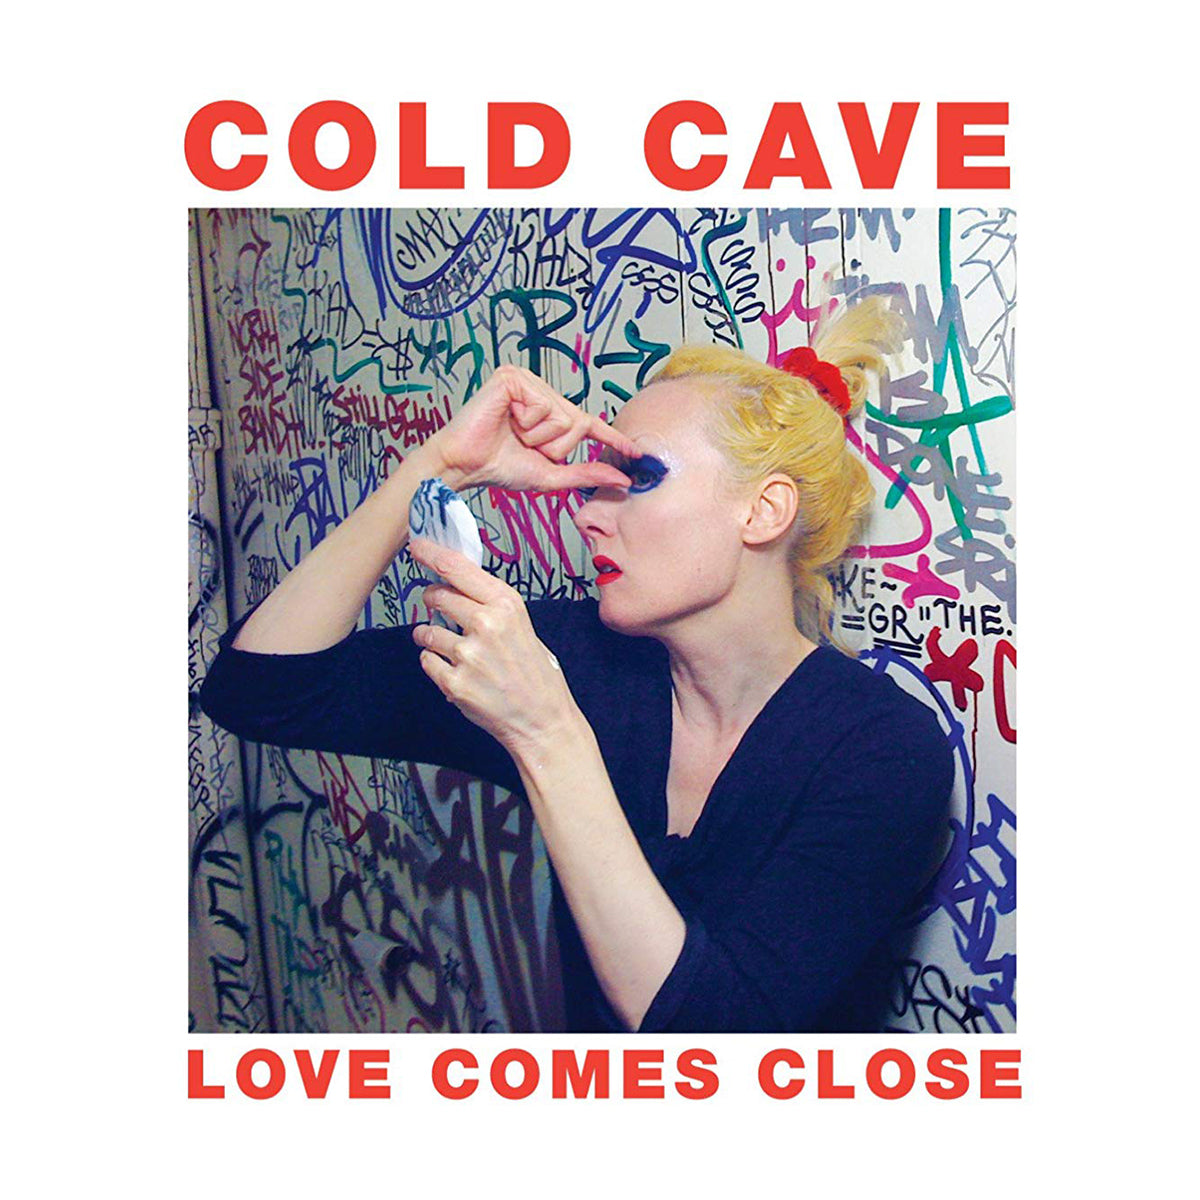 COLD CAVE "Love Comes Close" LP